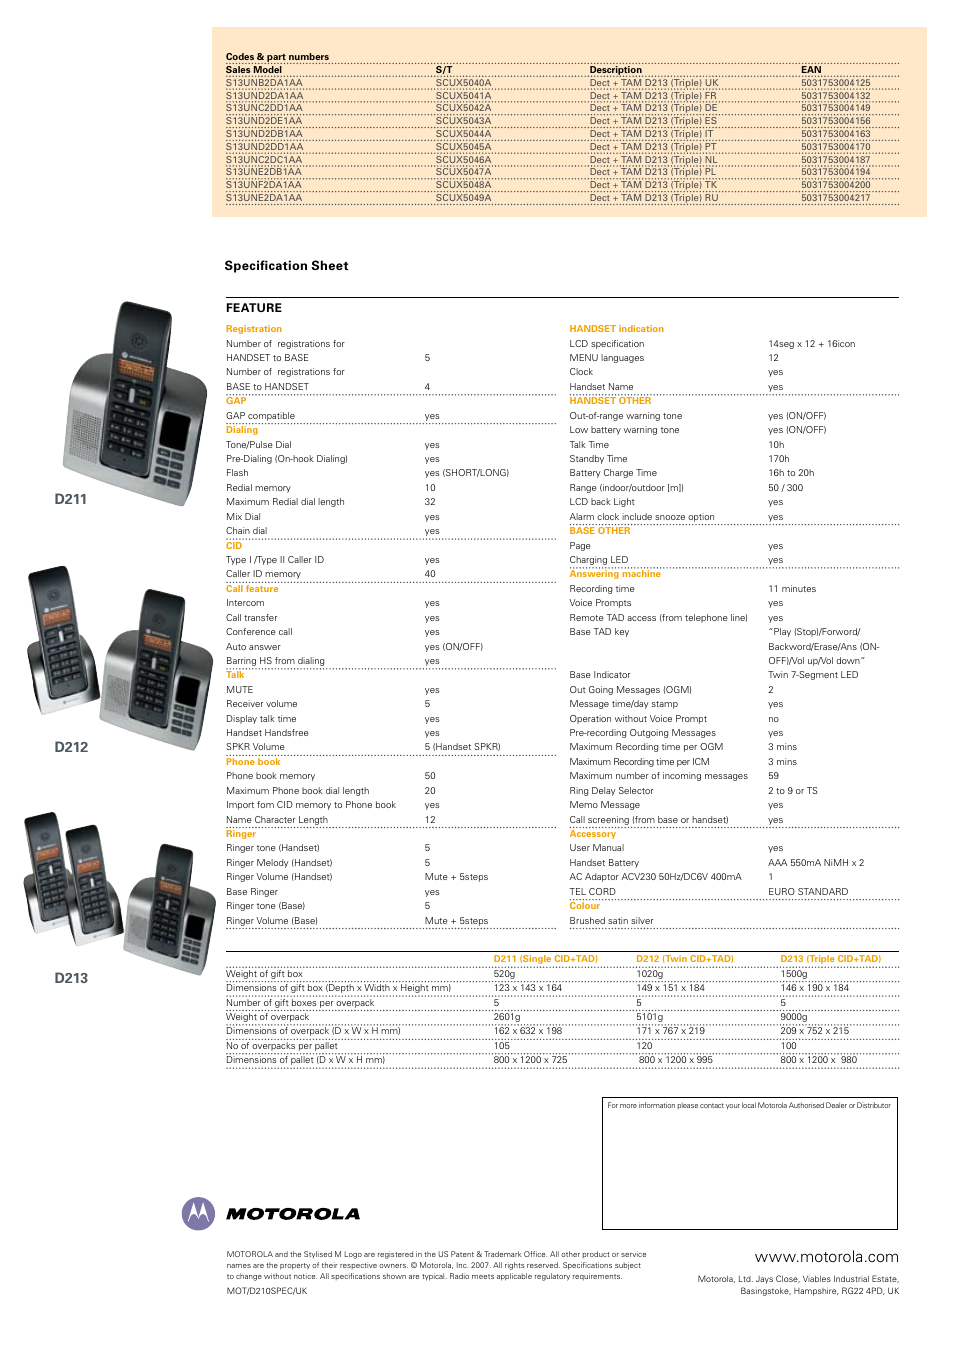 Motorola D210 Series User Manual | Page 2 / 2